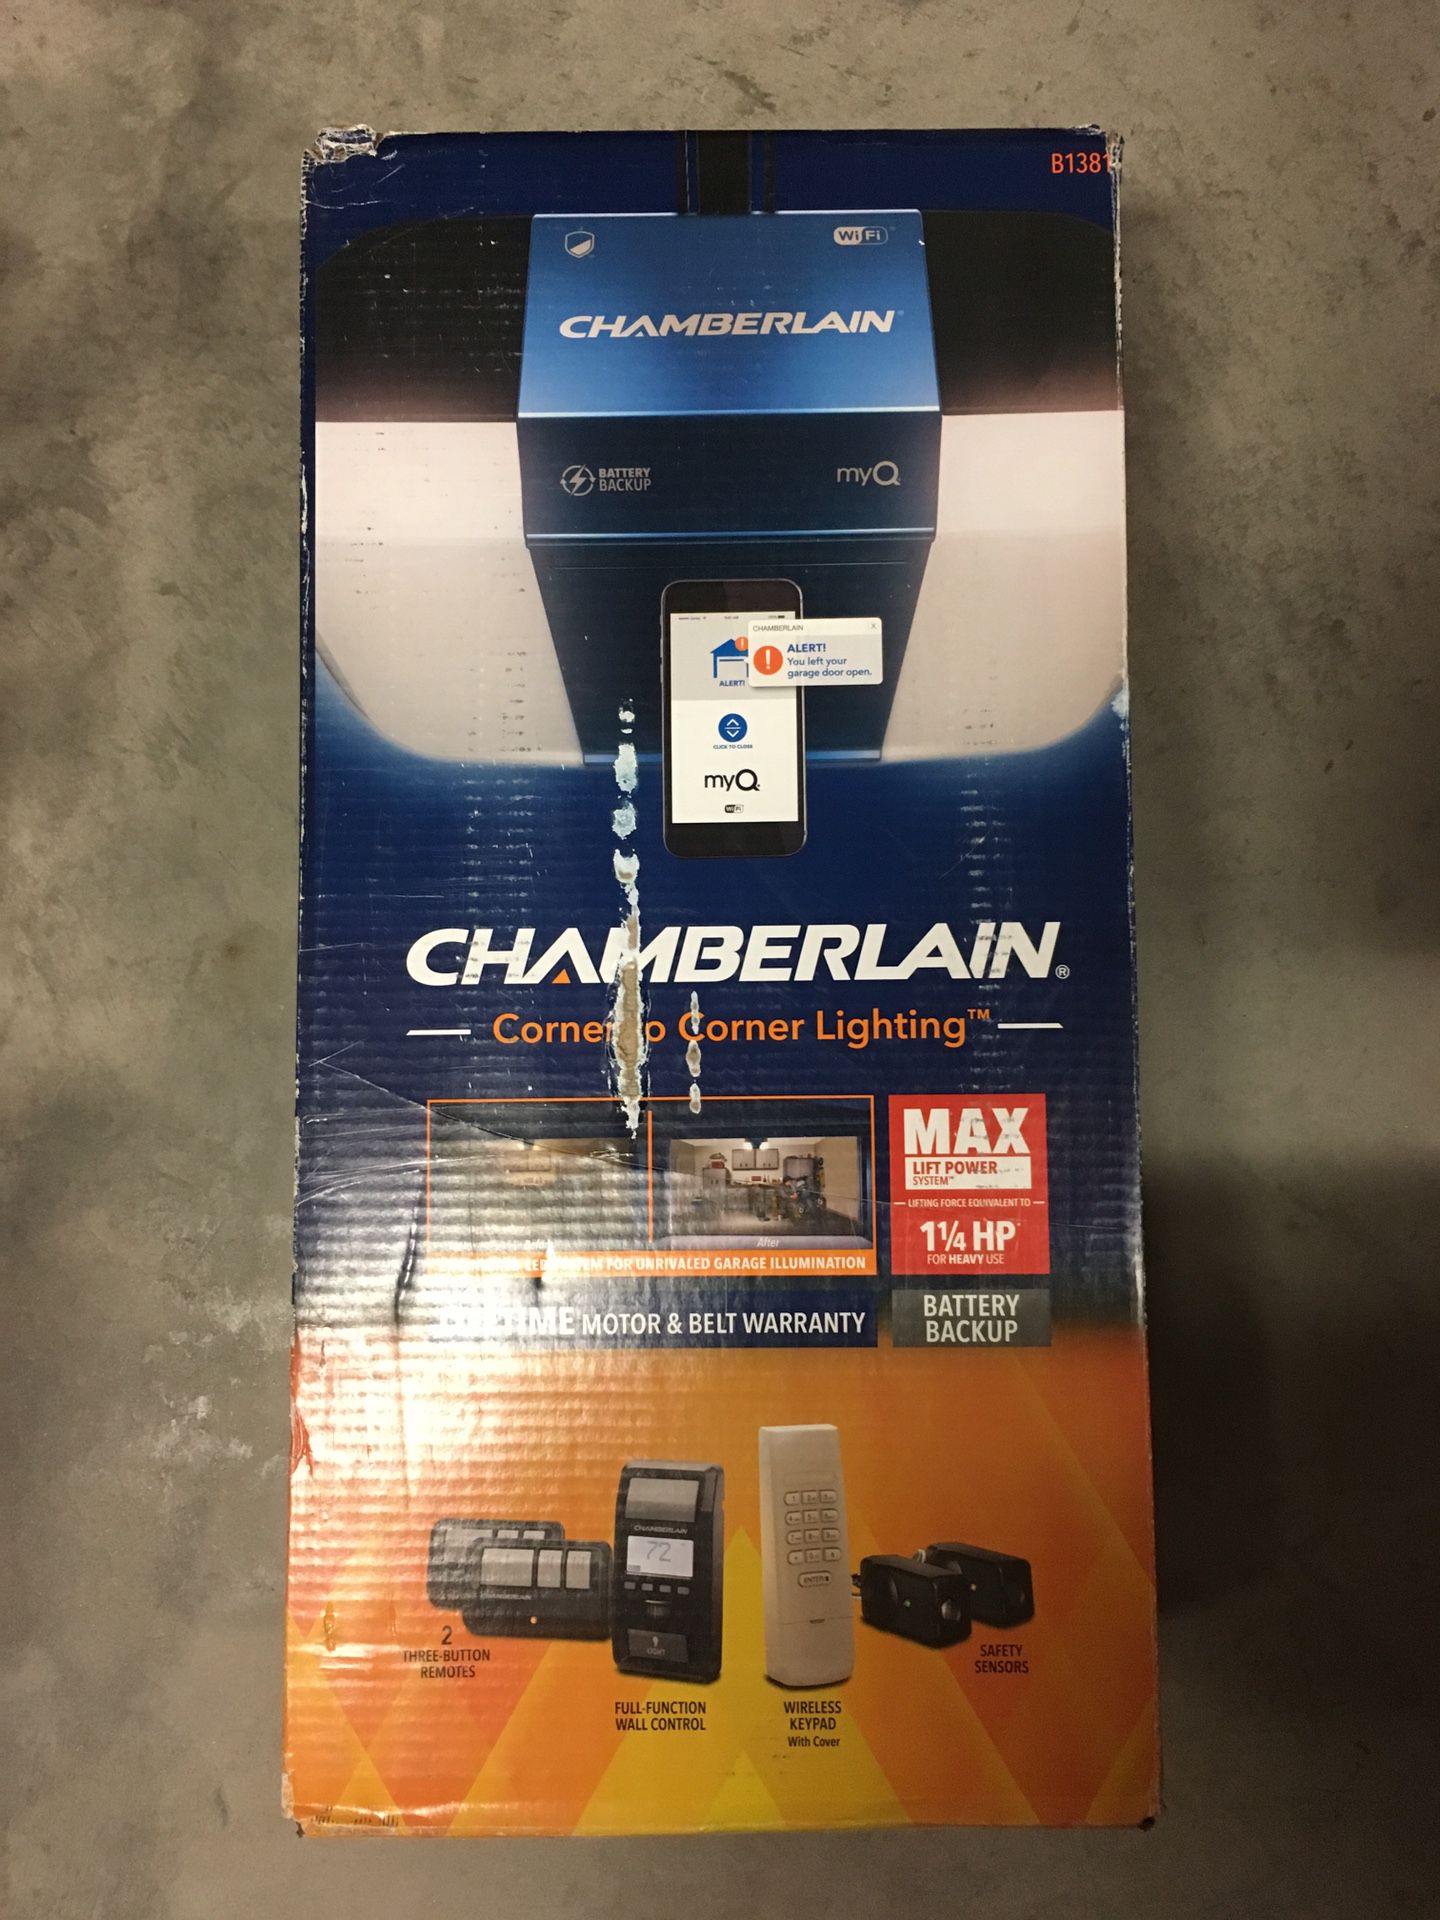 Chamberlain B1381 1.25 HP Smart Garage Door Opener with Battery Backup